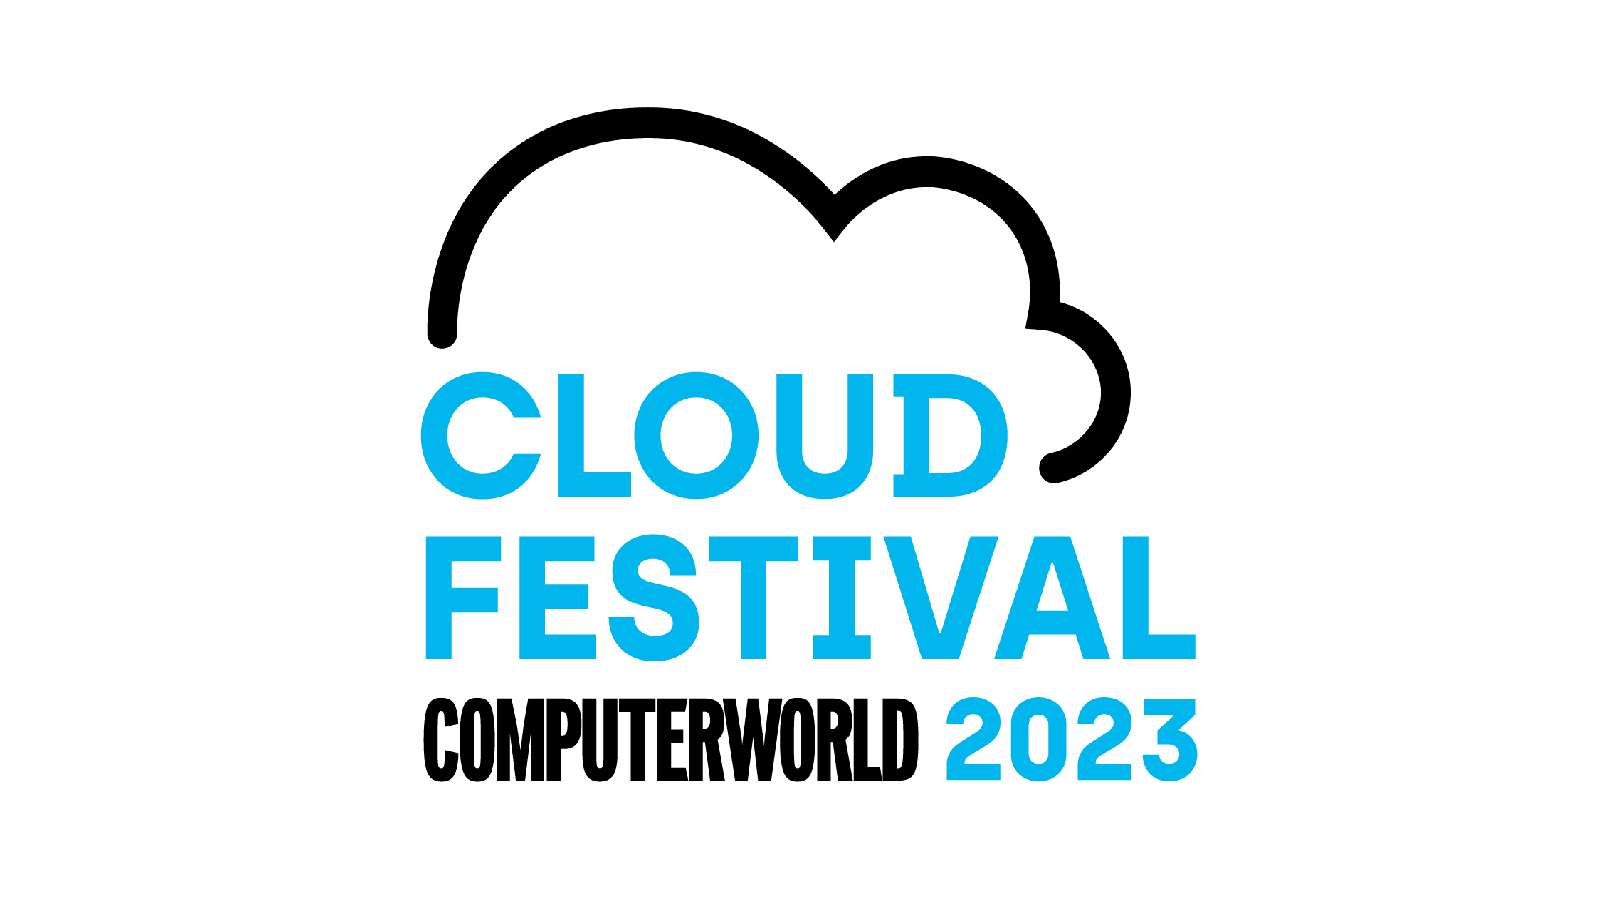 Computerworld Cloud Festival 2023 logo